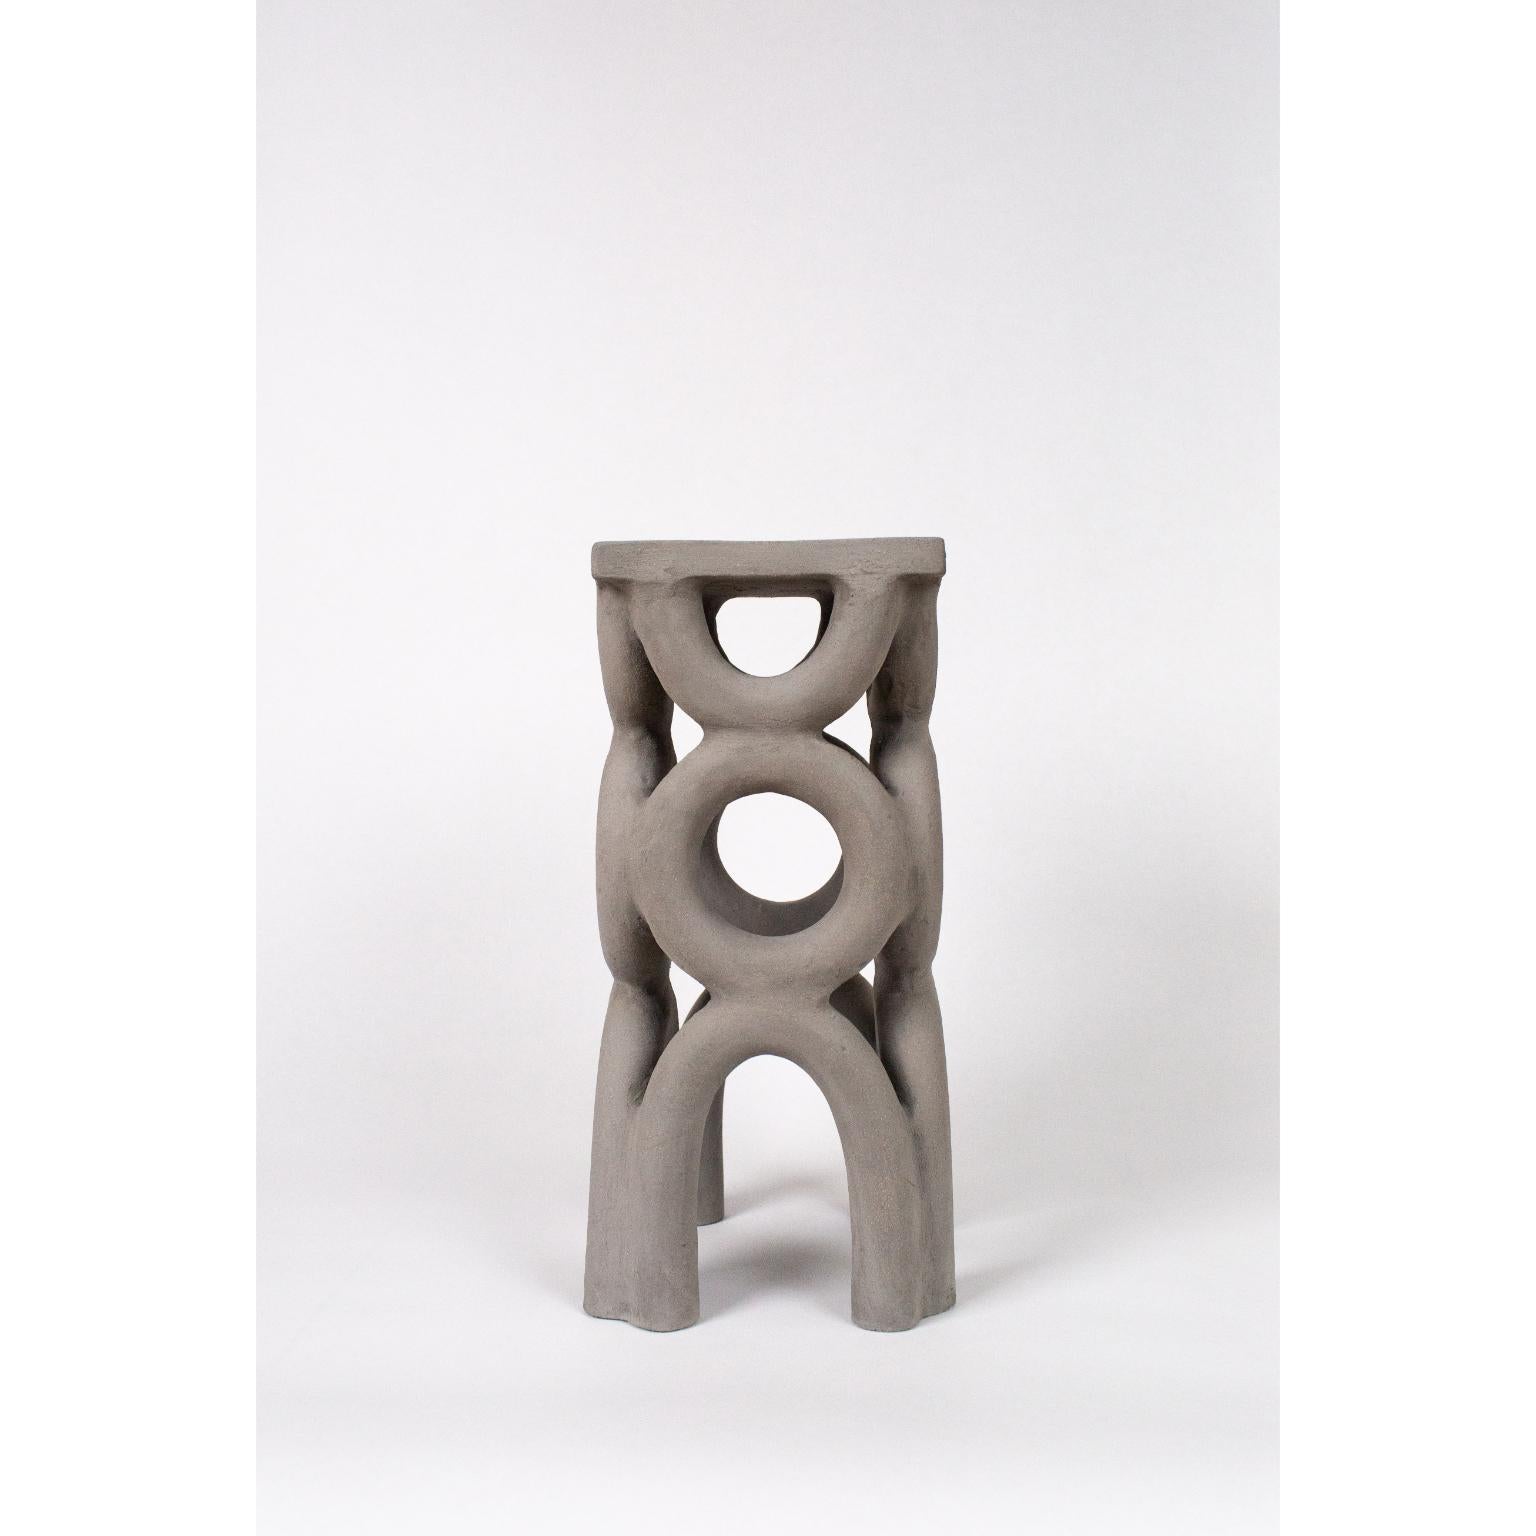 Unique arch square stool by Mesut Öztürk.
Dimensions:  W 20 x D 20 x  H 40 cm.
Materials: stoneware. 

